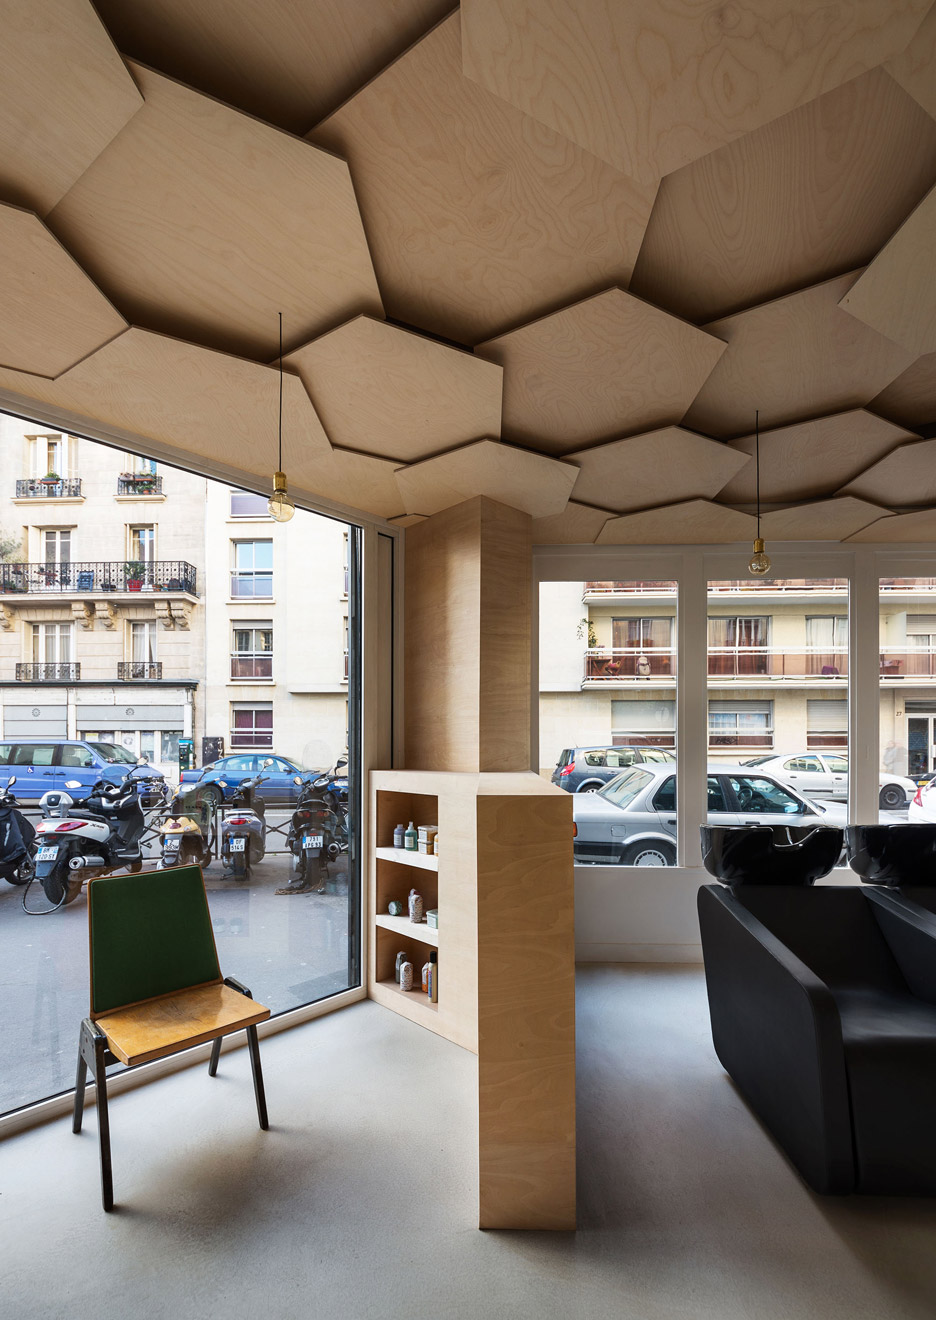 Joshua Florquin adds hexagonal-patterend ceiling to Les Dada East hair salon in Paris